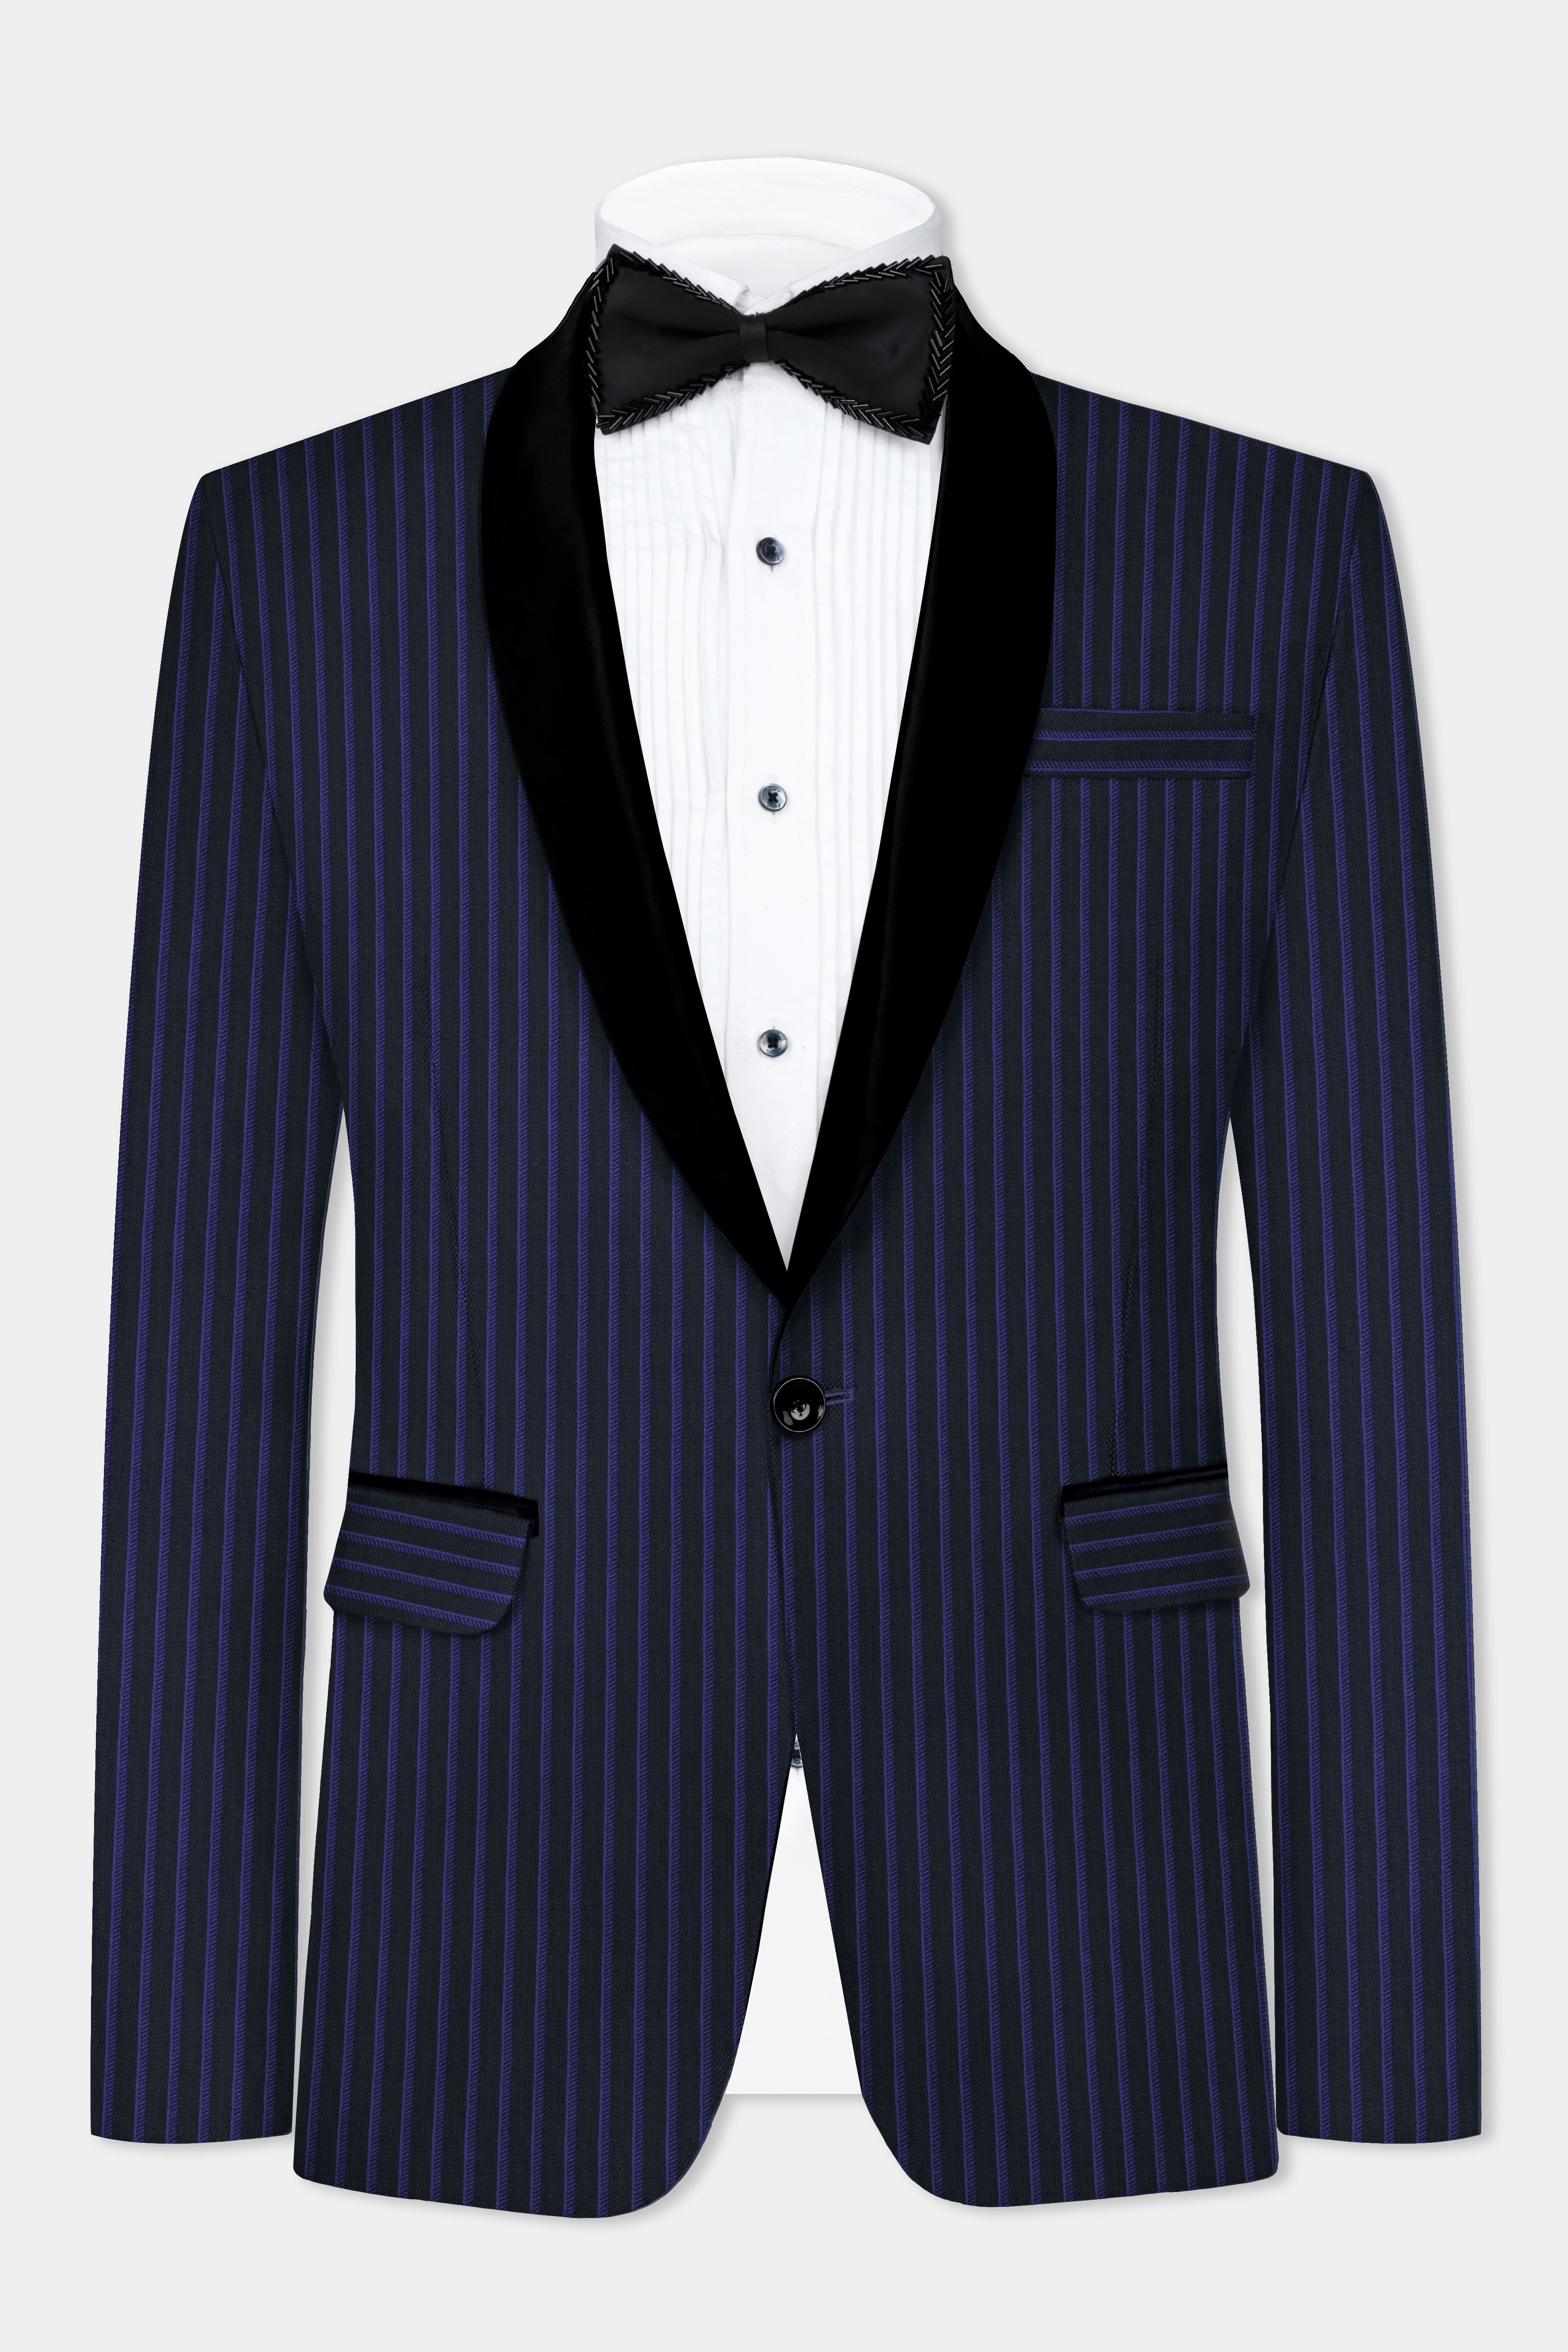 Shark Black with Blue Zodiac Striped Wool Blend Tuxedo Suit